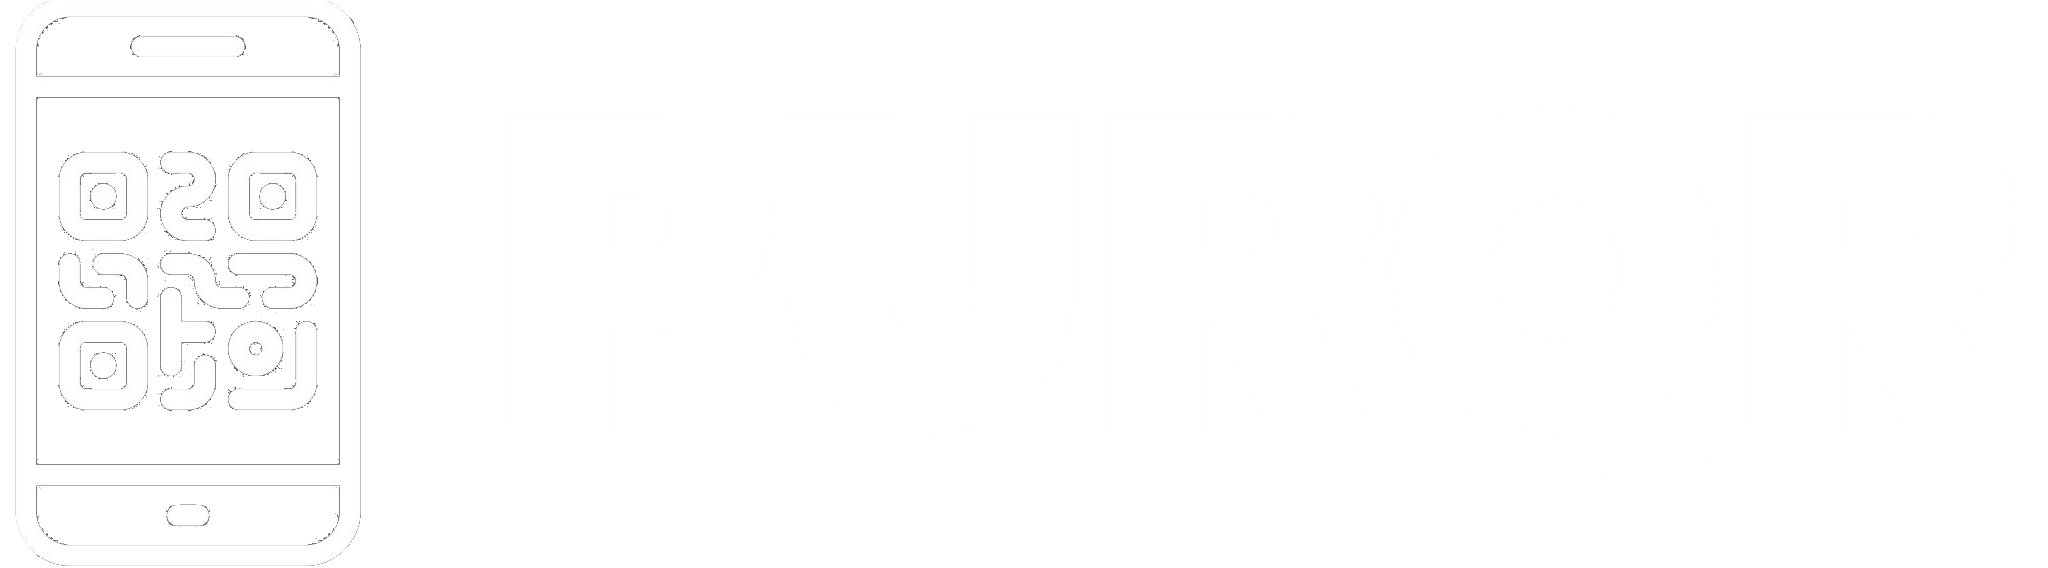 purqr-logo-white-transparant.png